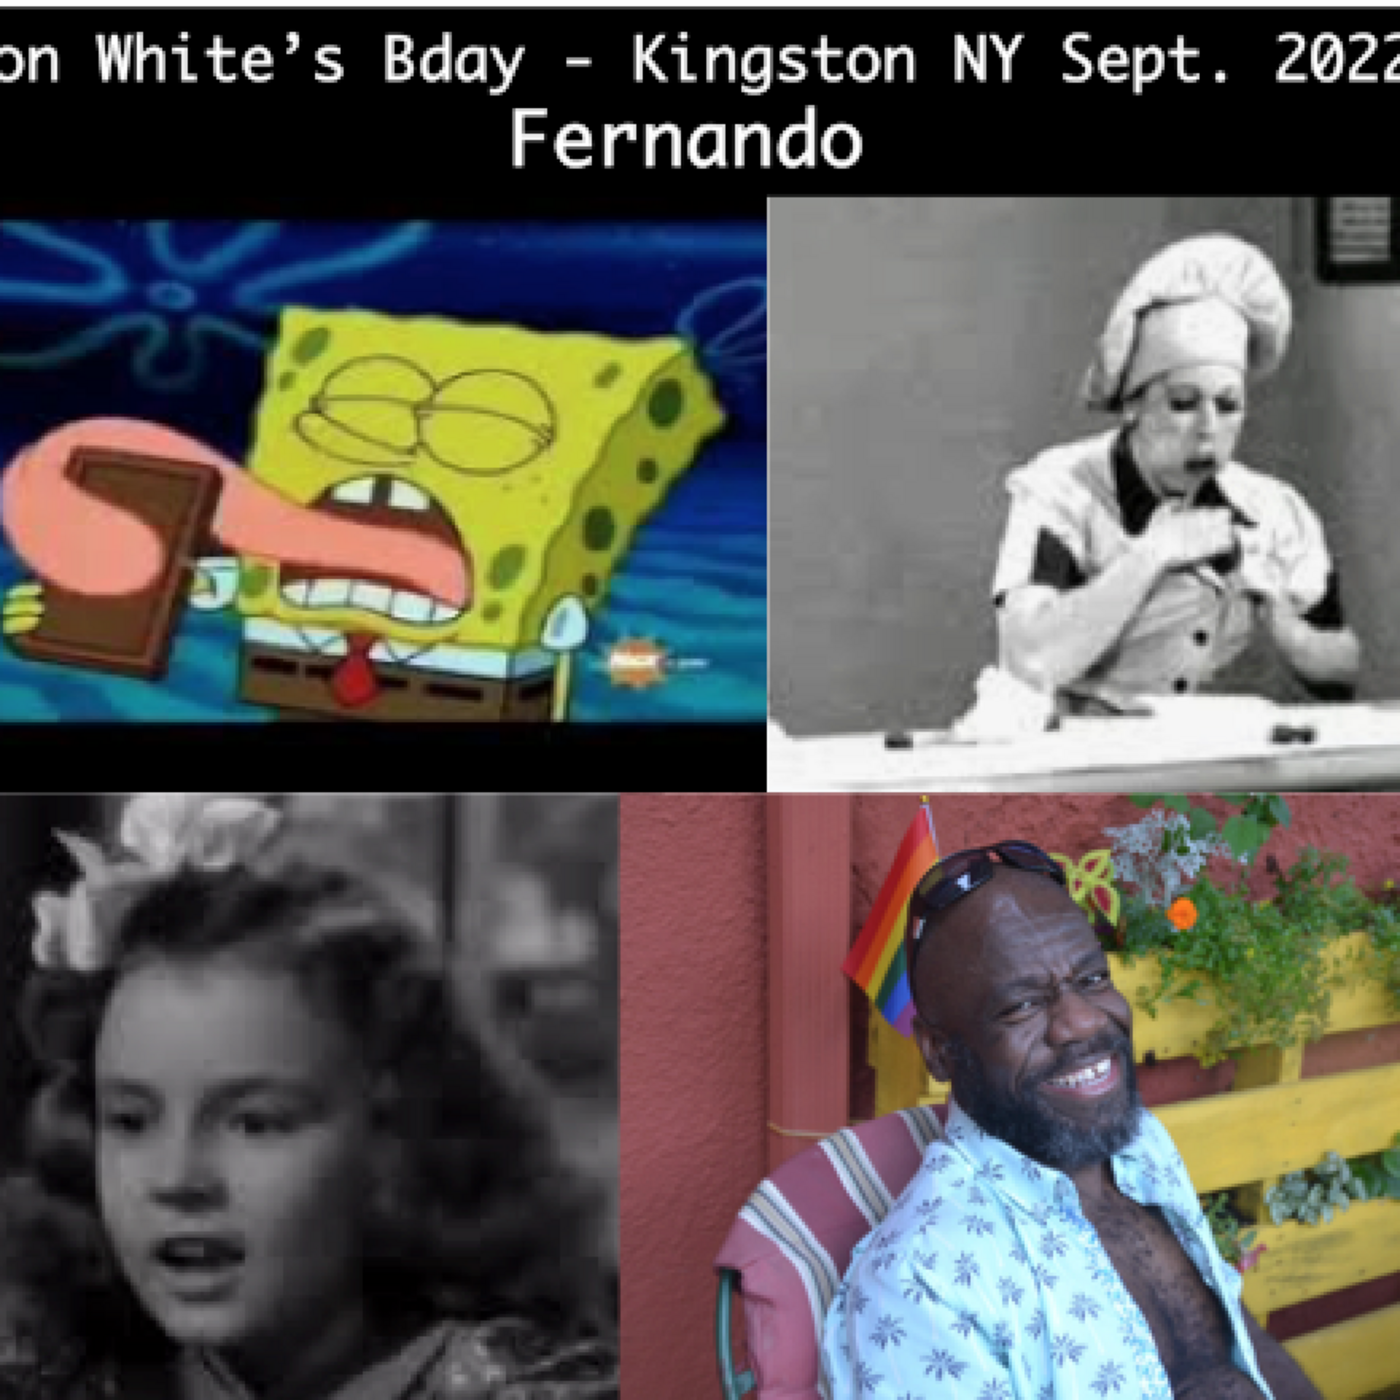 Episode 68: Jon White's Birthday -  Kingston Live Recording - Sept 2022